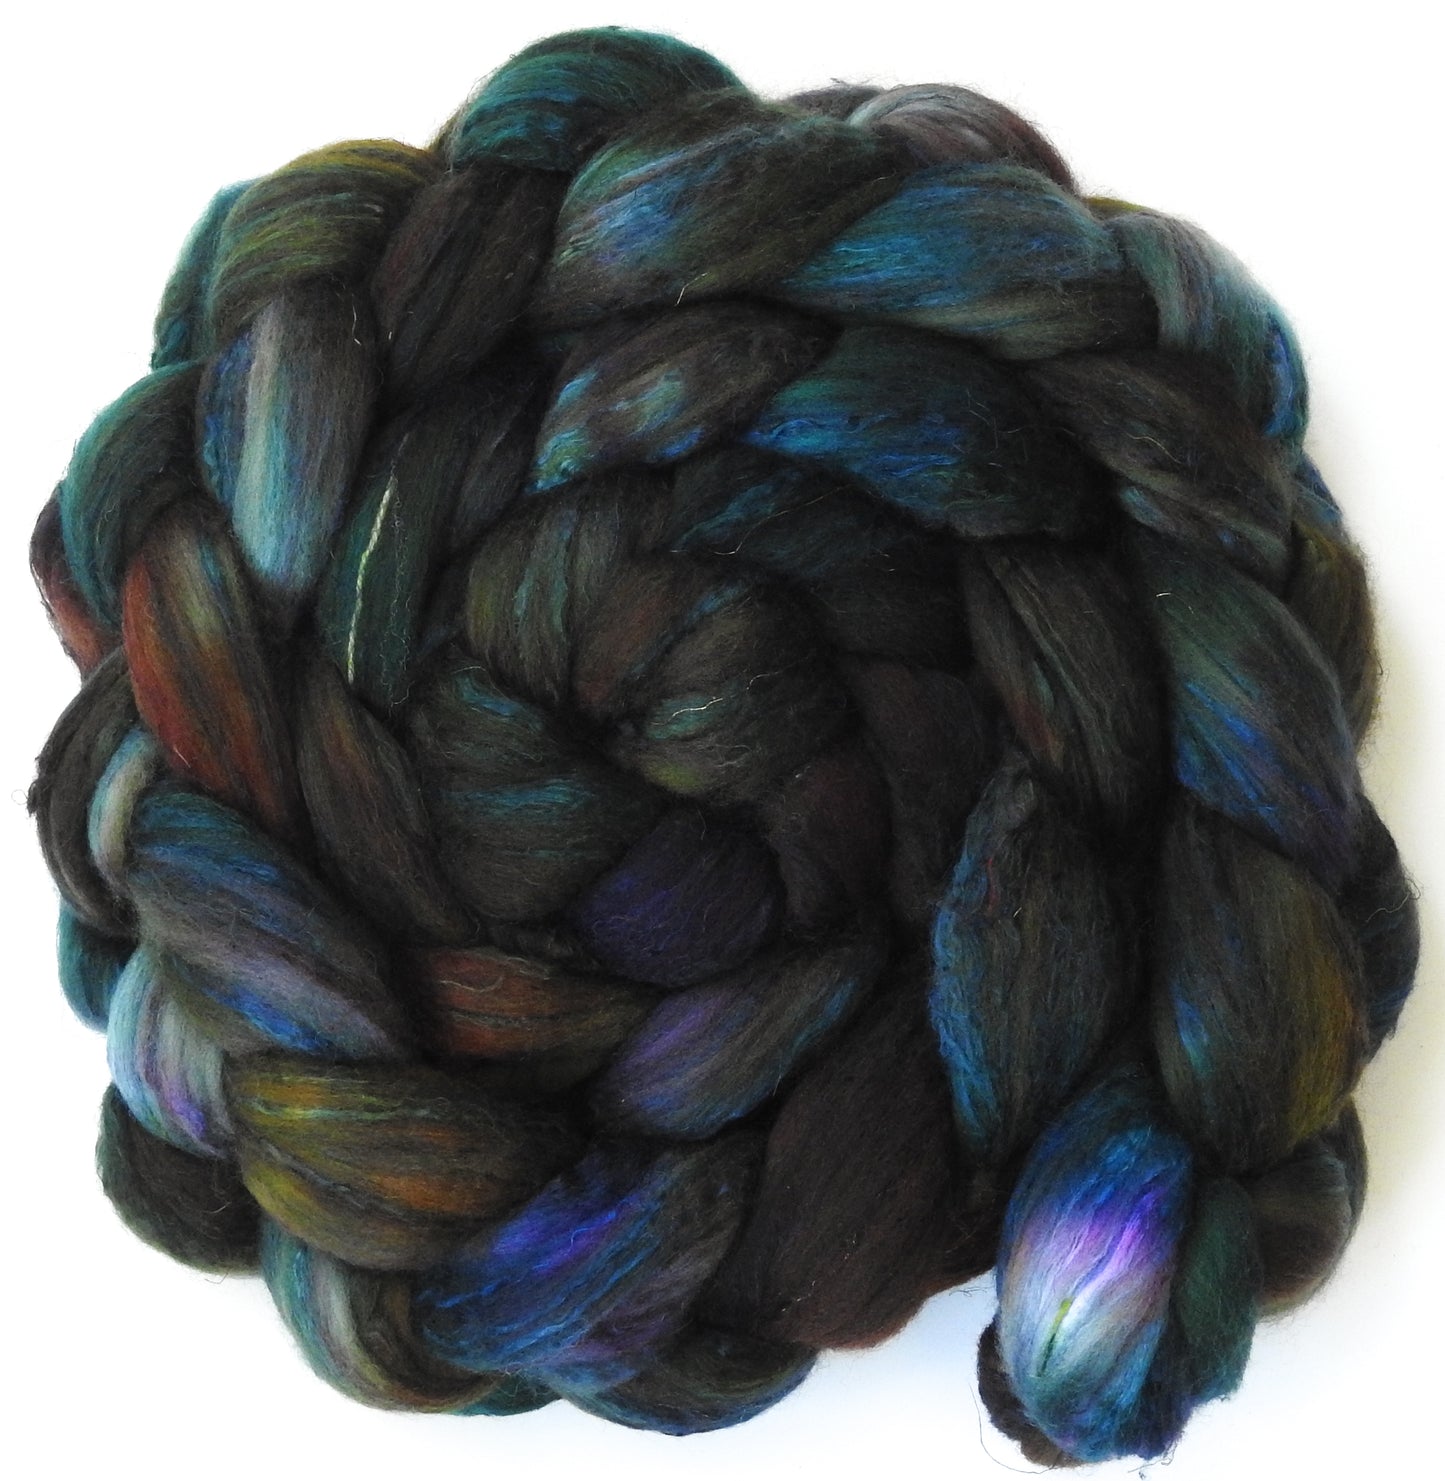 Entish (5.8 oz) - Fusion Series - Batt in a Braid #39  - Falkland Merino/ Mulberry Silk / Sari Silk (50/25/25)